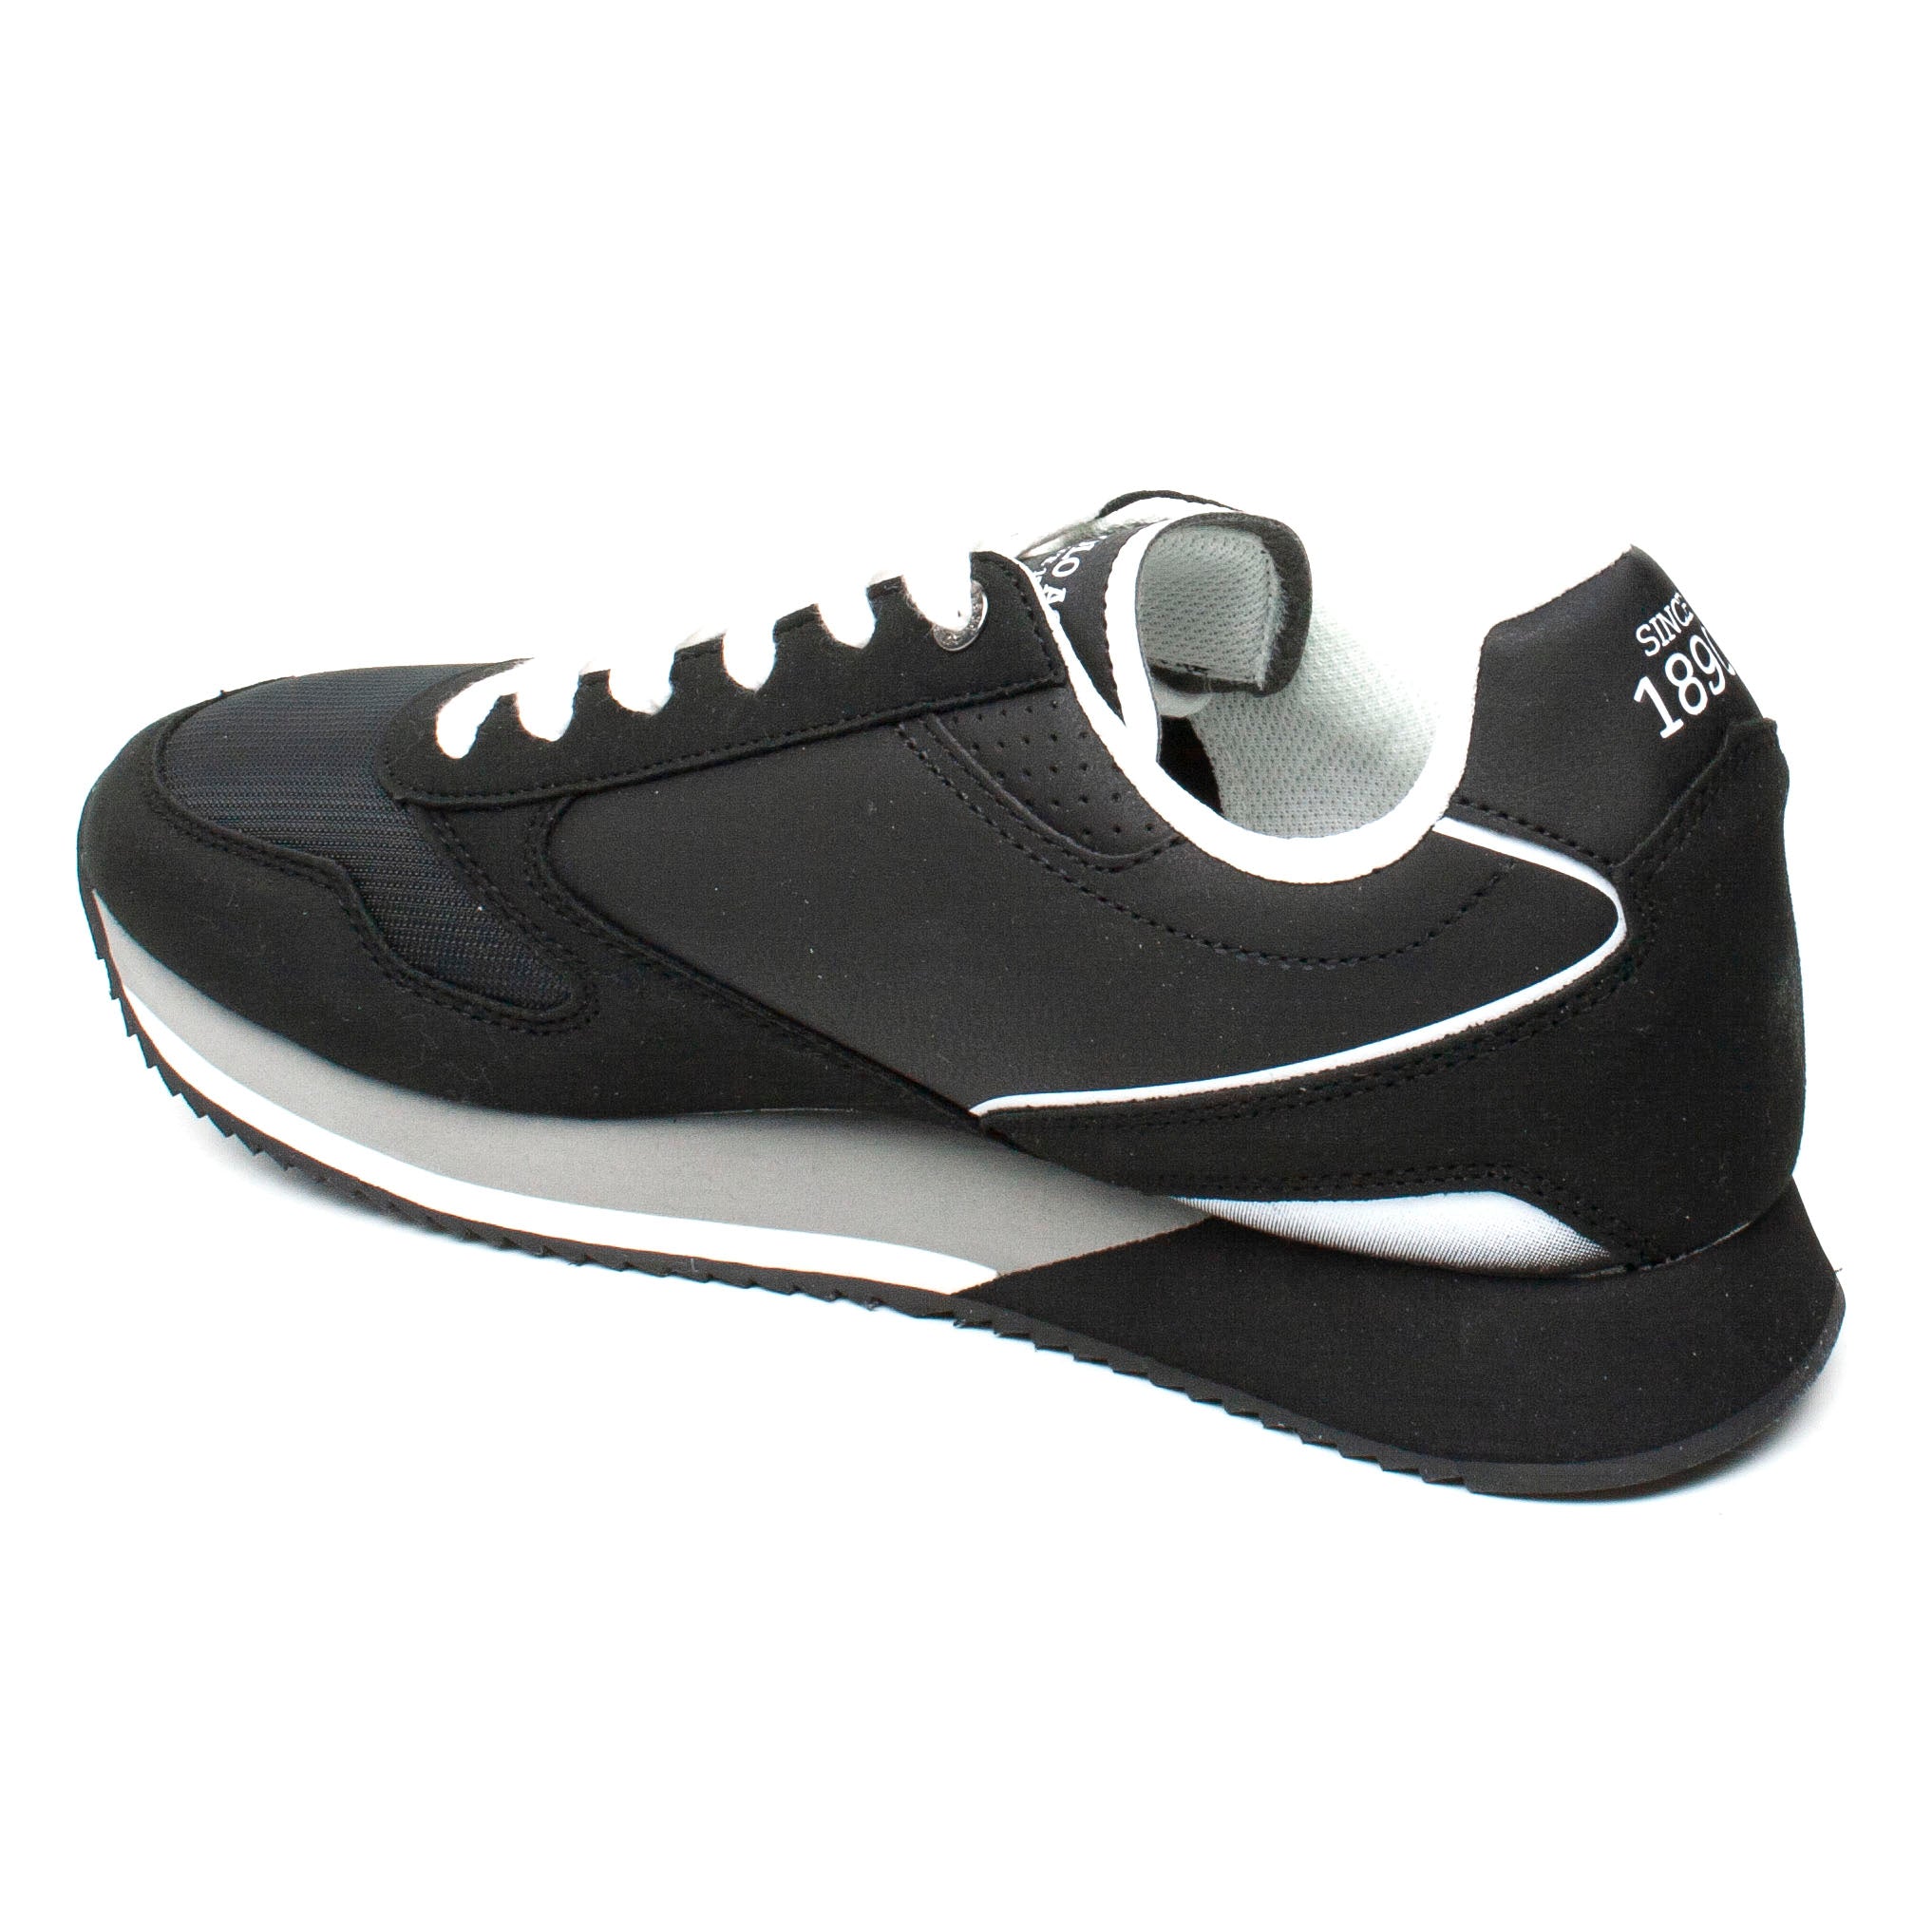 Polo pantofi sport barbati nobil negru IB2107-NG